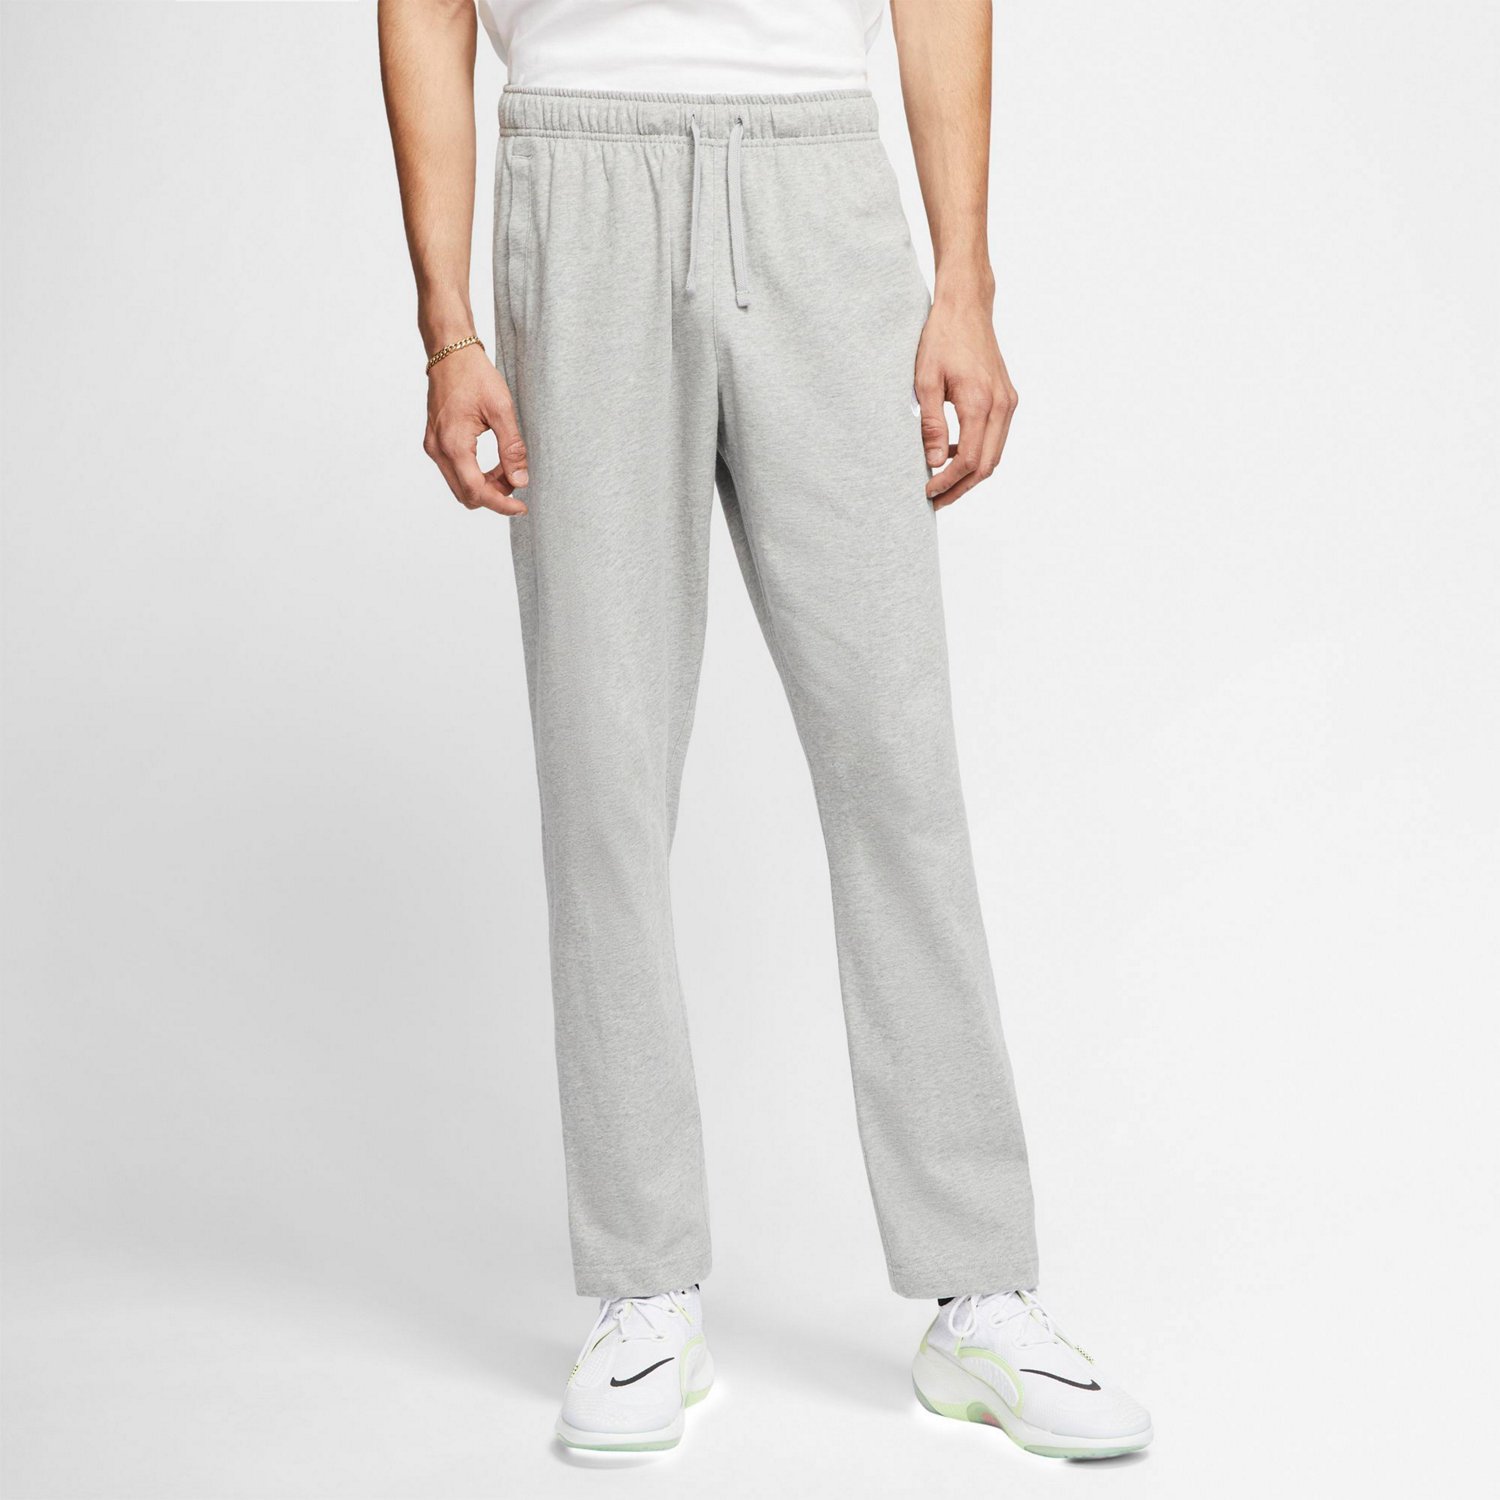  Nike - Men's Sweatpants / Men's Athletic Pants